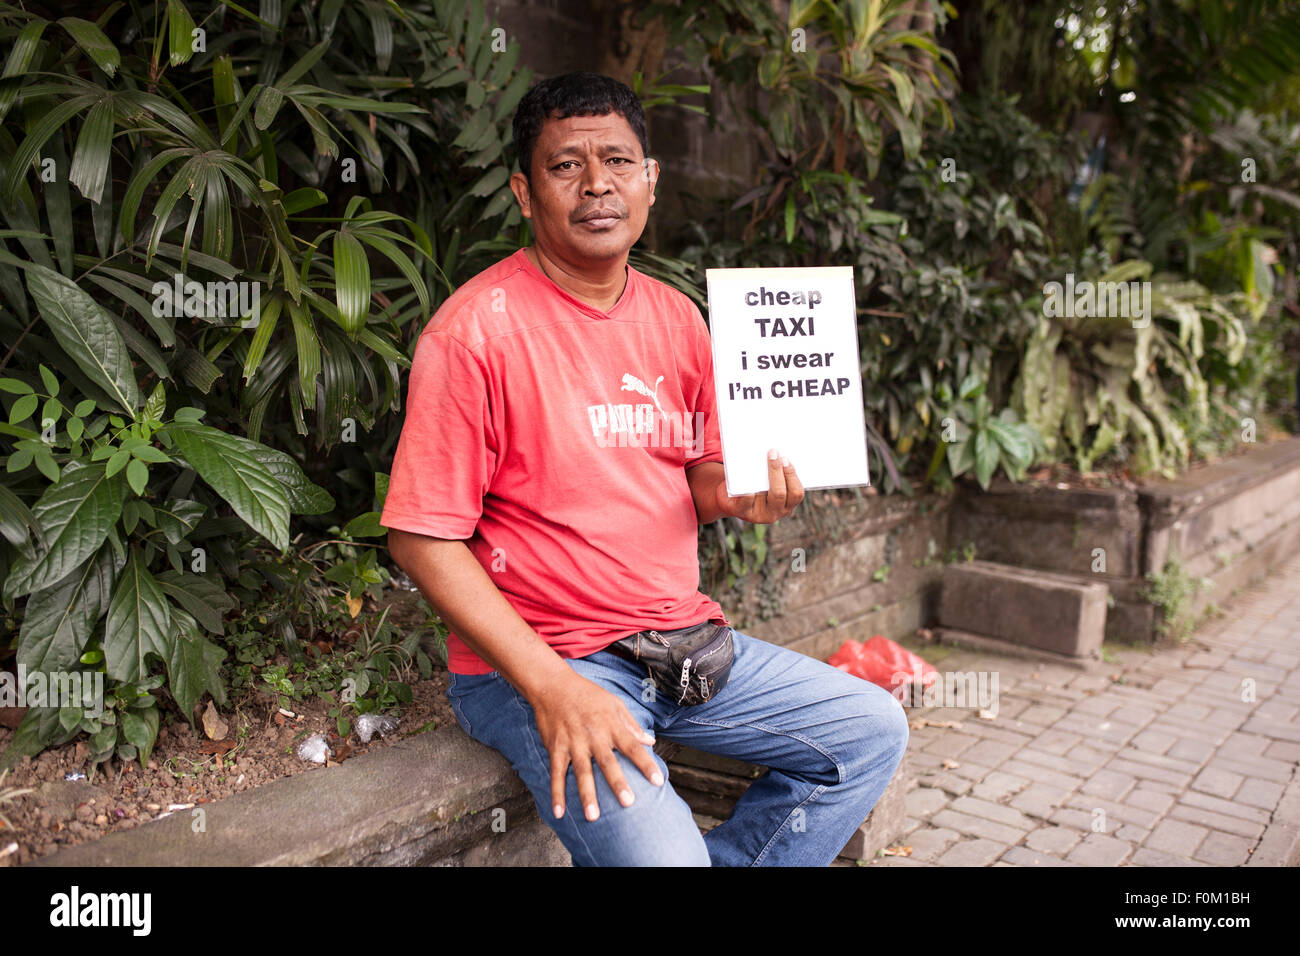 Taxi driver, Sign, Bali Stock Photo